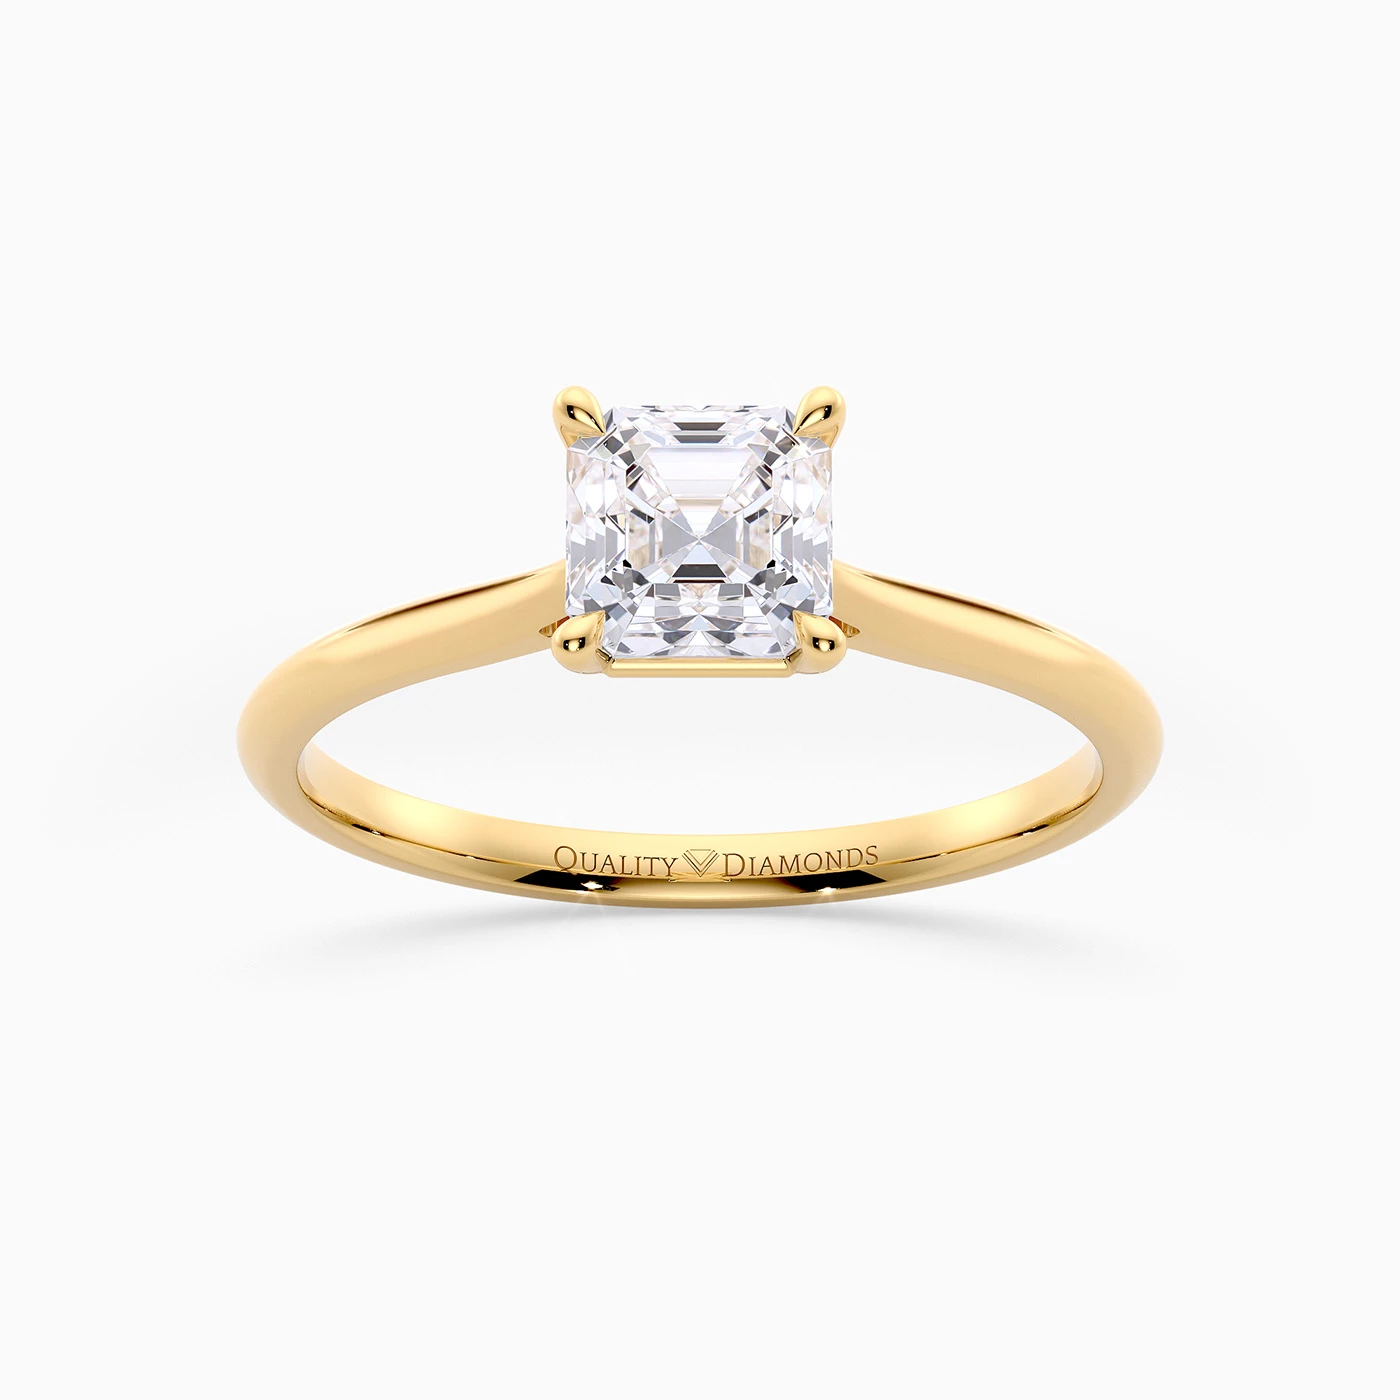 Asscher Carys Diamond Ring in 9K Yellow Gold